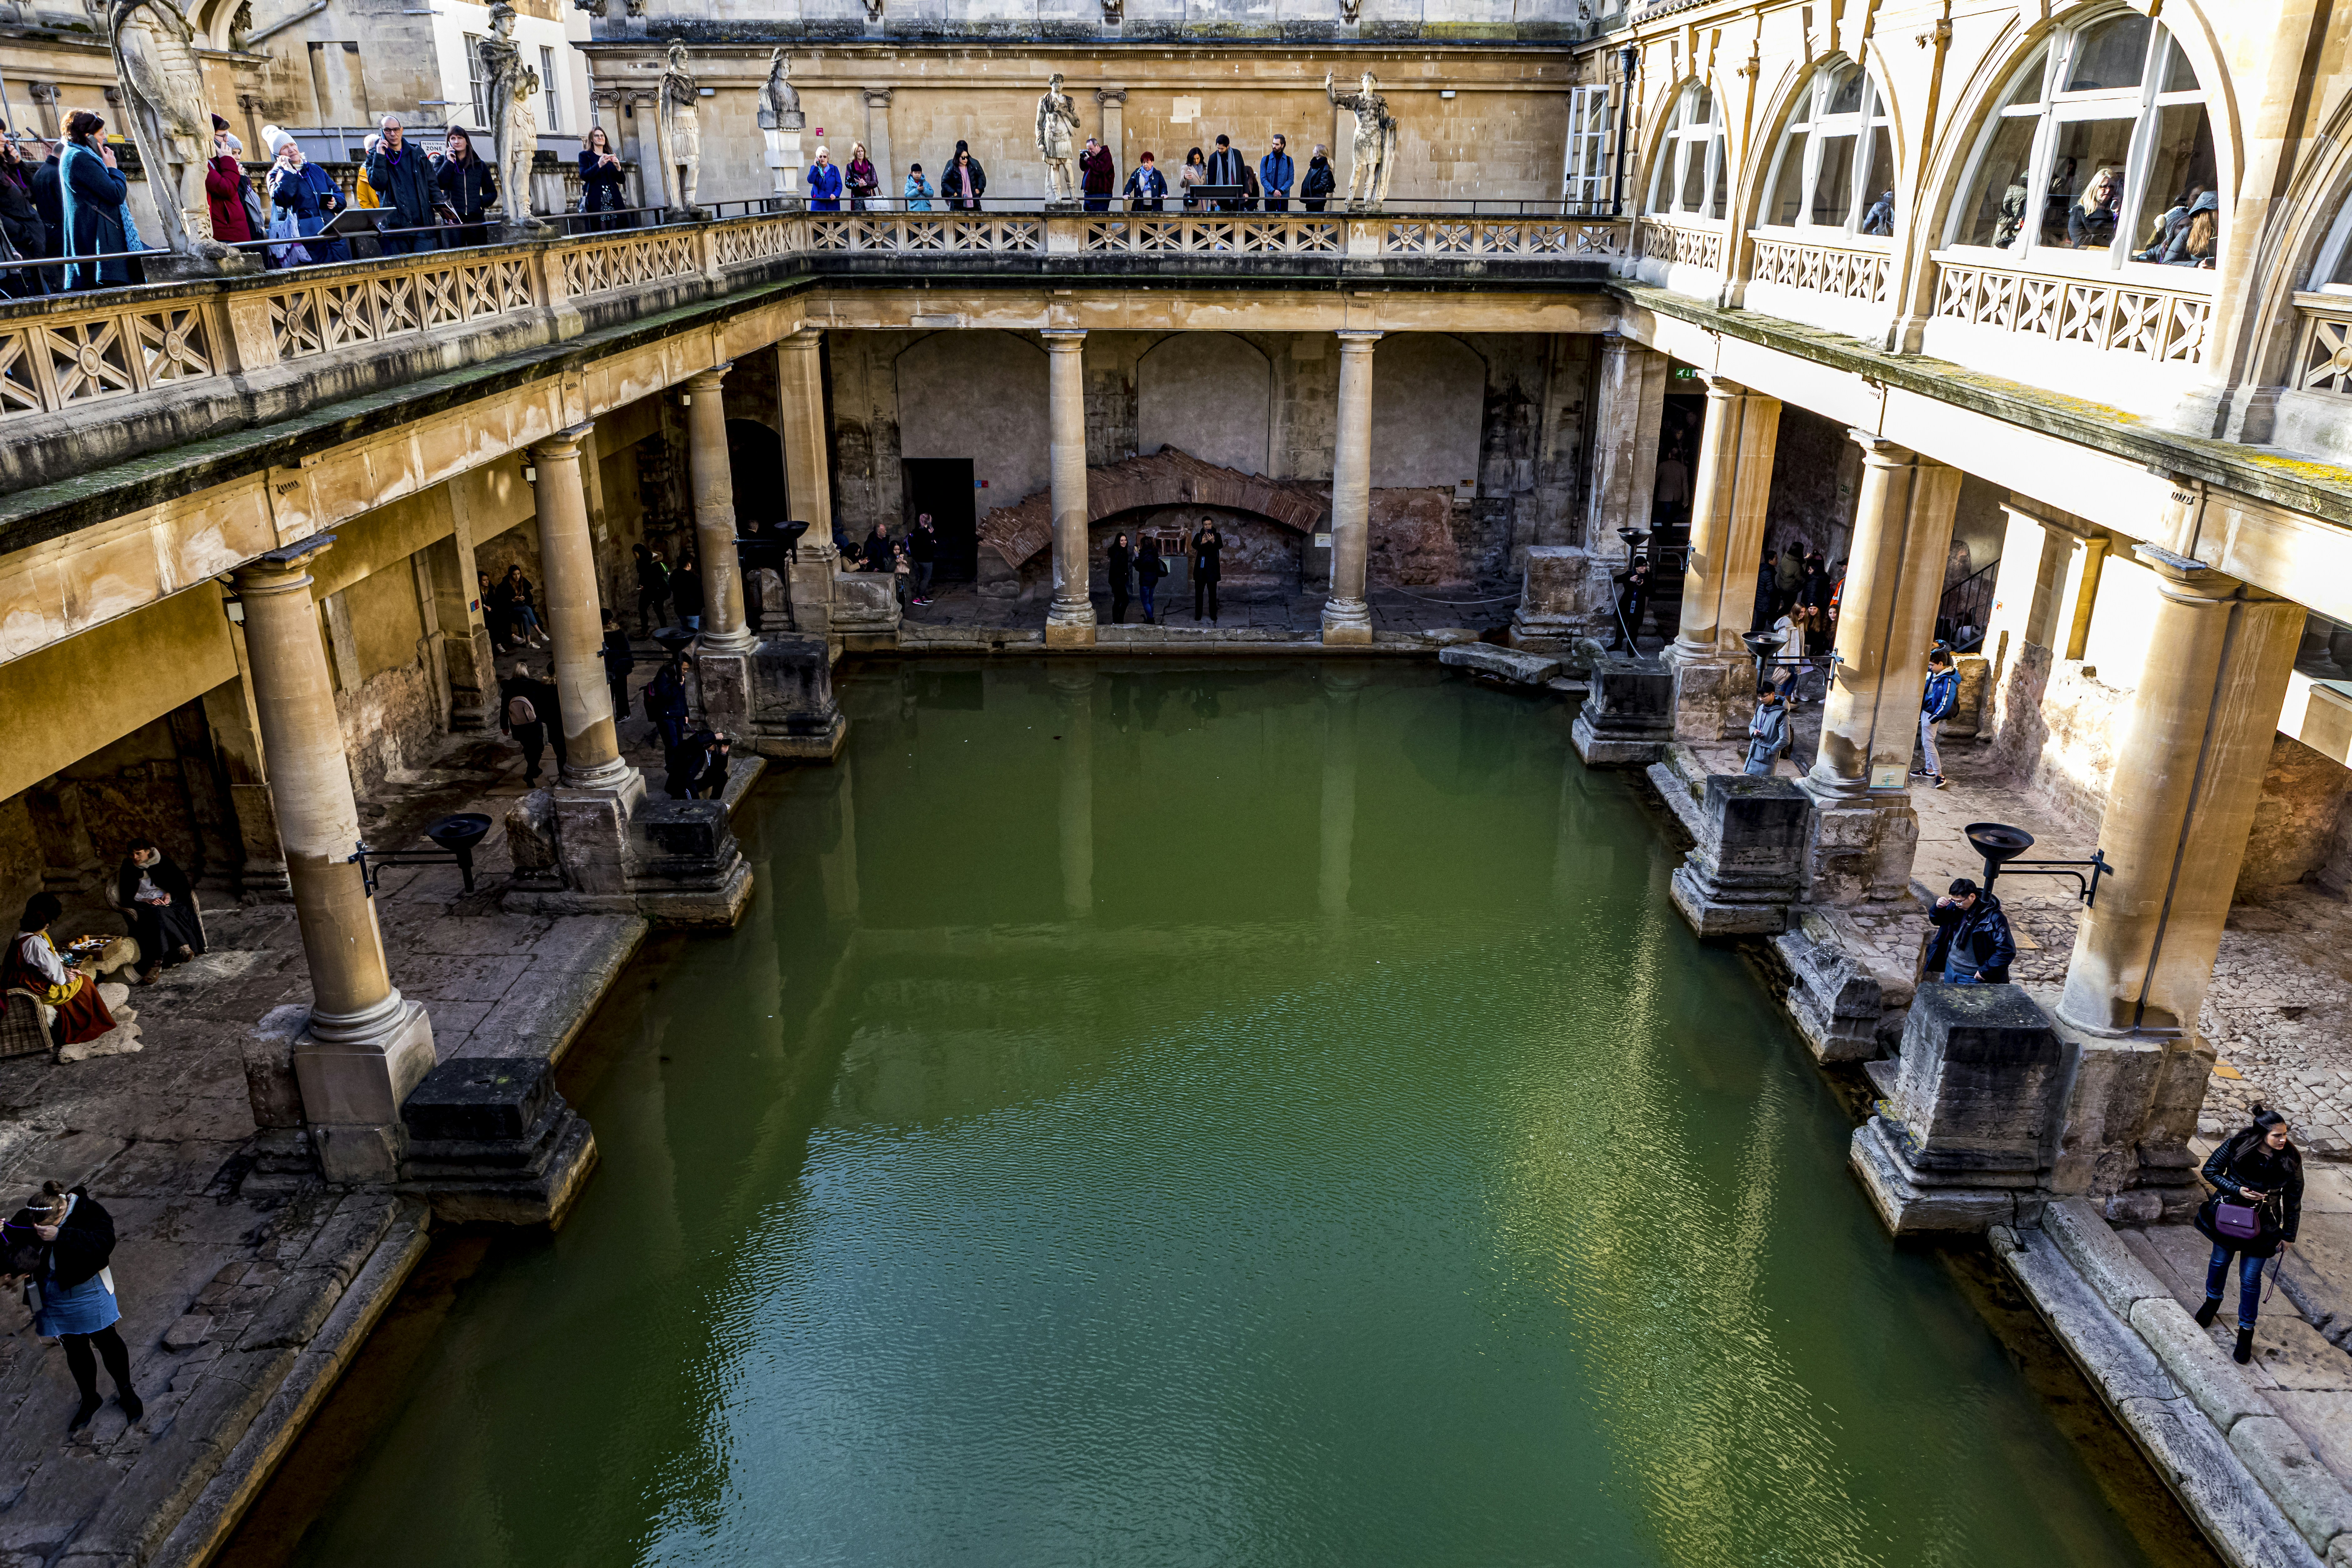 Antique historic landmark Roman Baths in Bath England UK, February 2020.